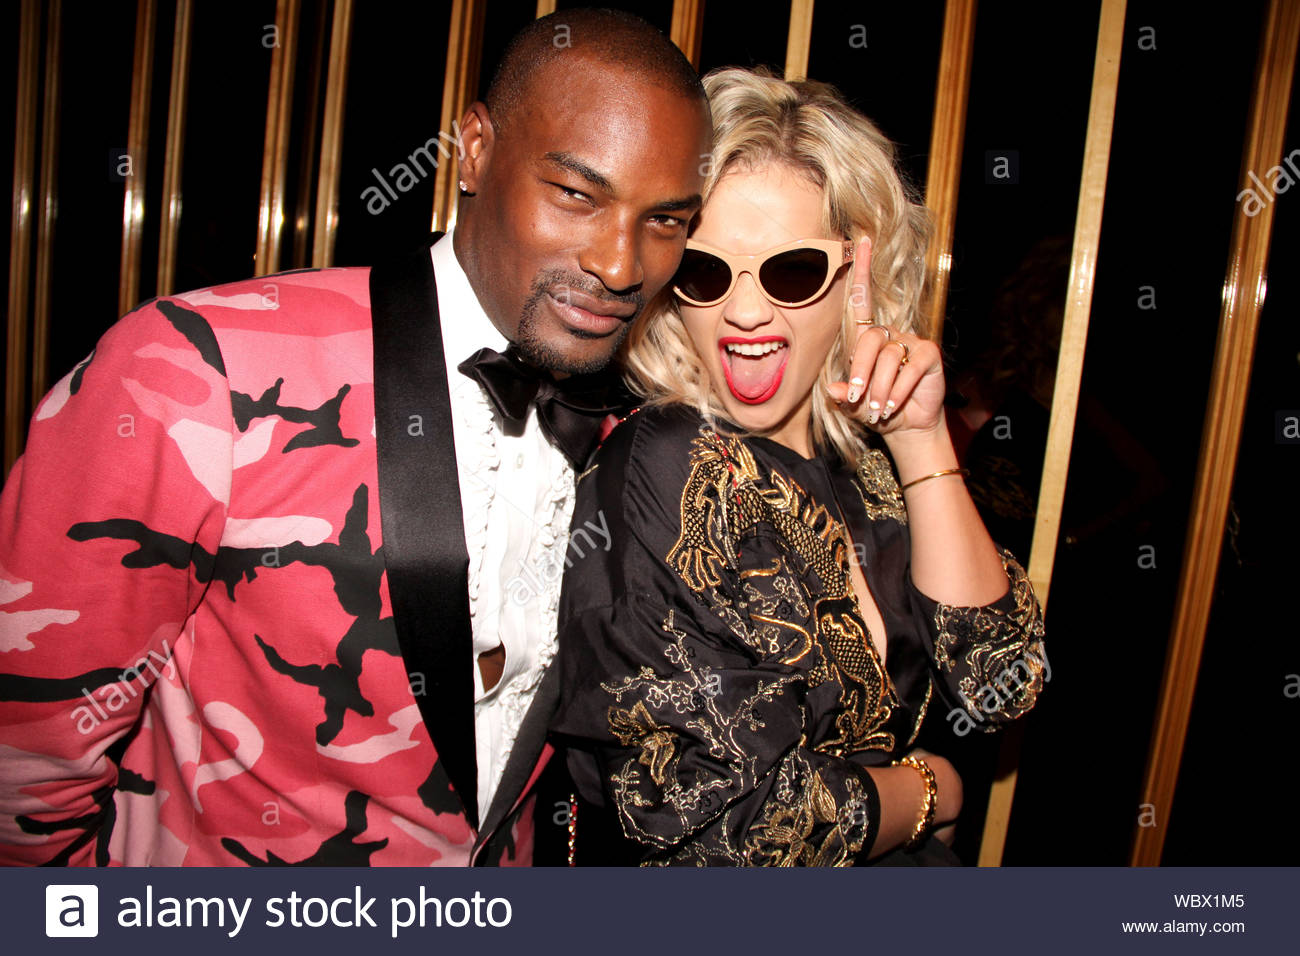 New York Ny Model Tyson Beckford And Singer Rita Ora